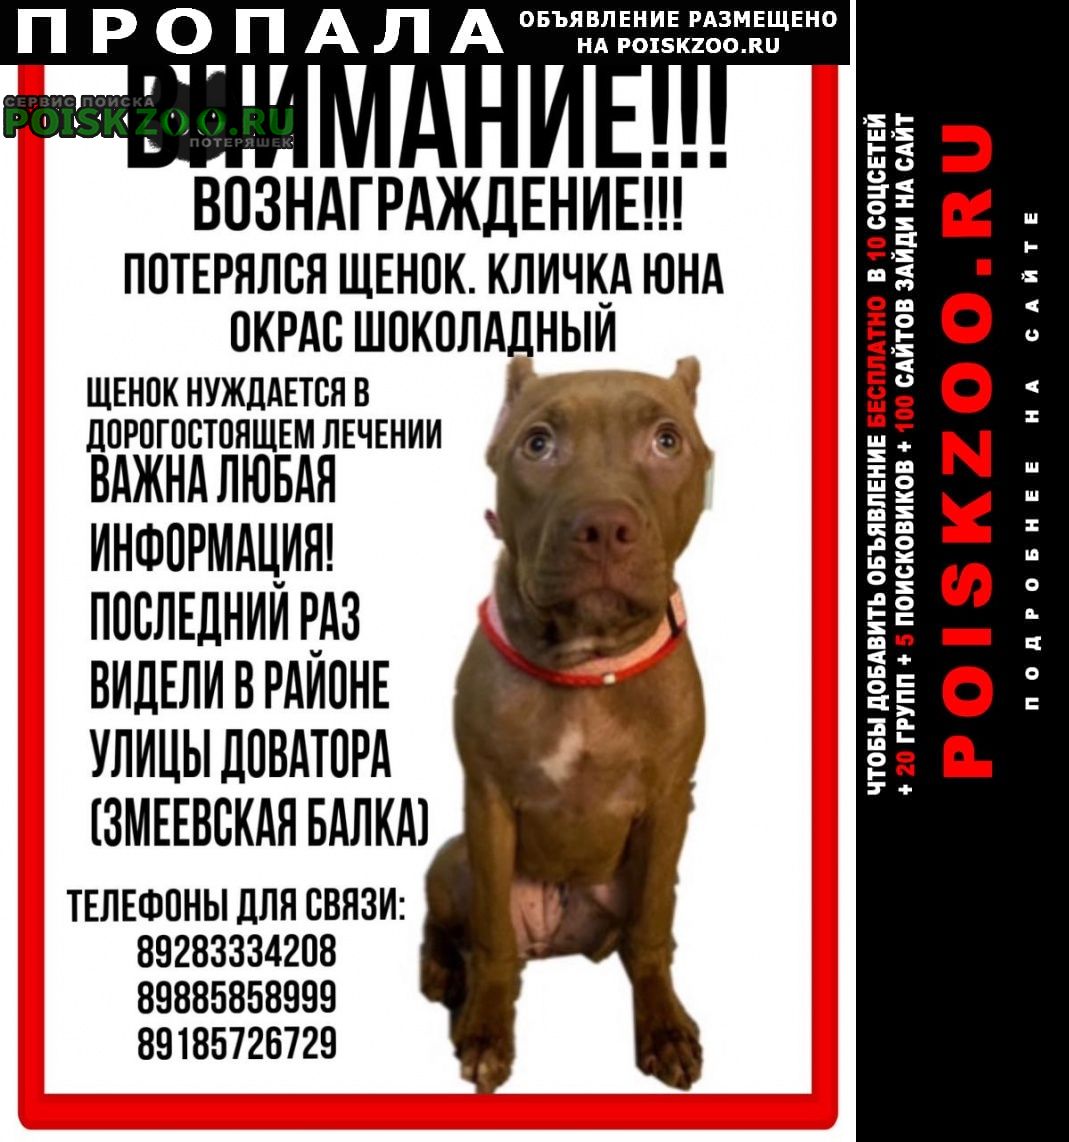 Ростов-на-Дону Пропала собака убежал щенок на доватора